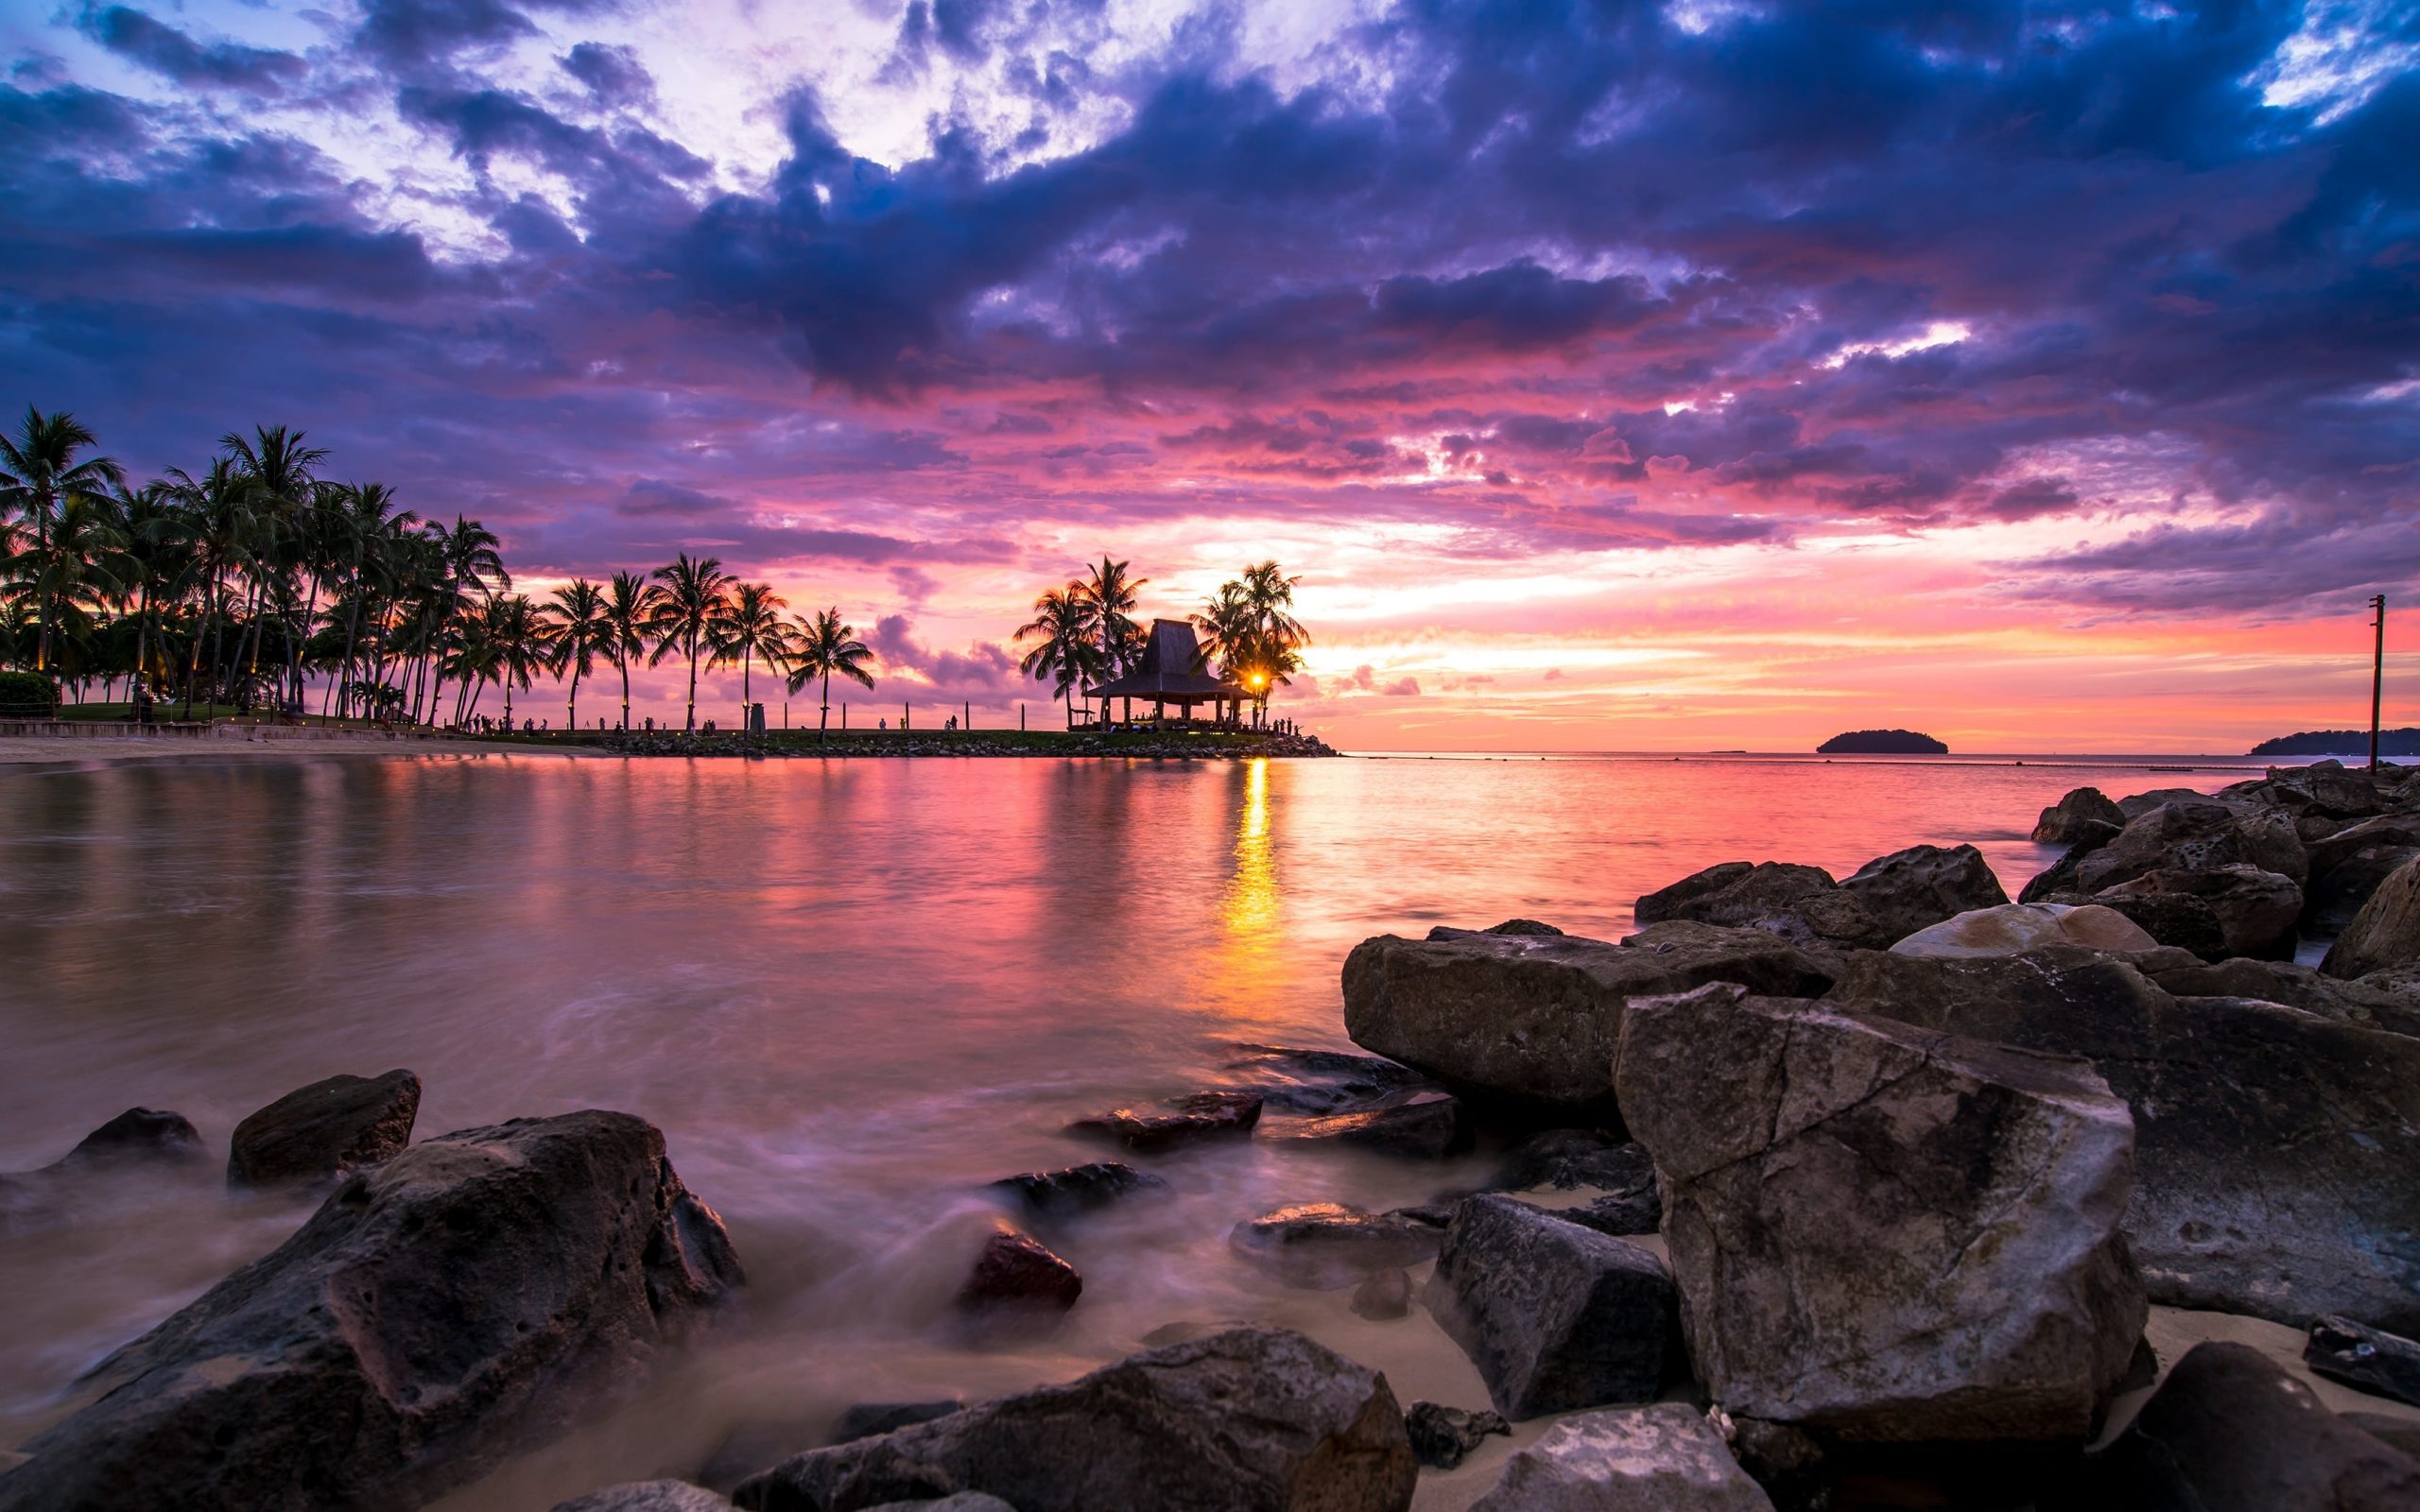 Coconut trees, nature, landscape, sunset, tropical, beach, clouds wallpaper